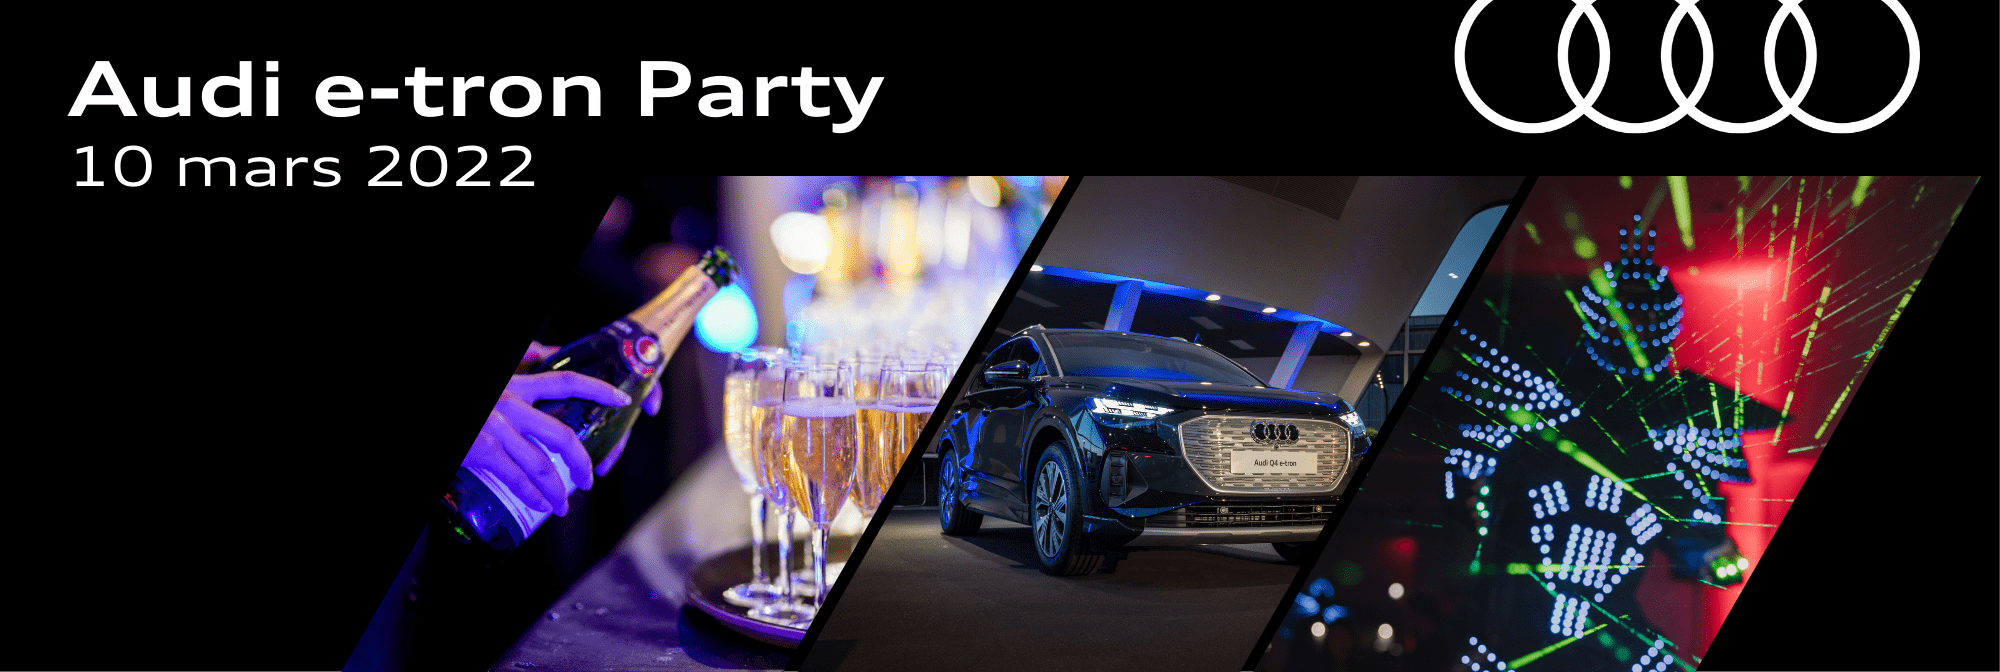 Audi Avion AUTO-EXPO - Audi e-tron Party